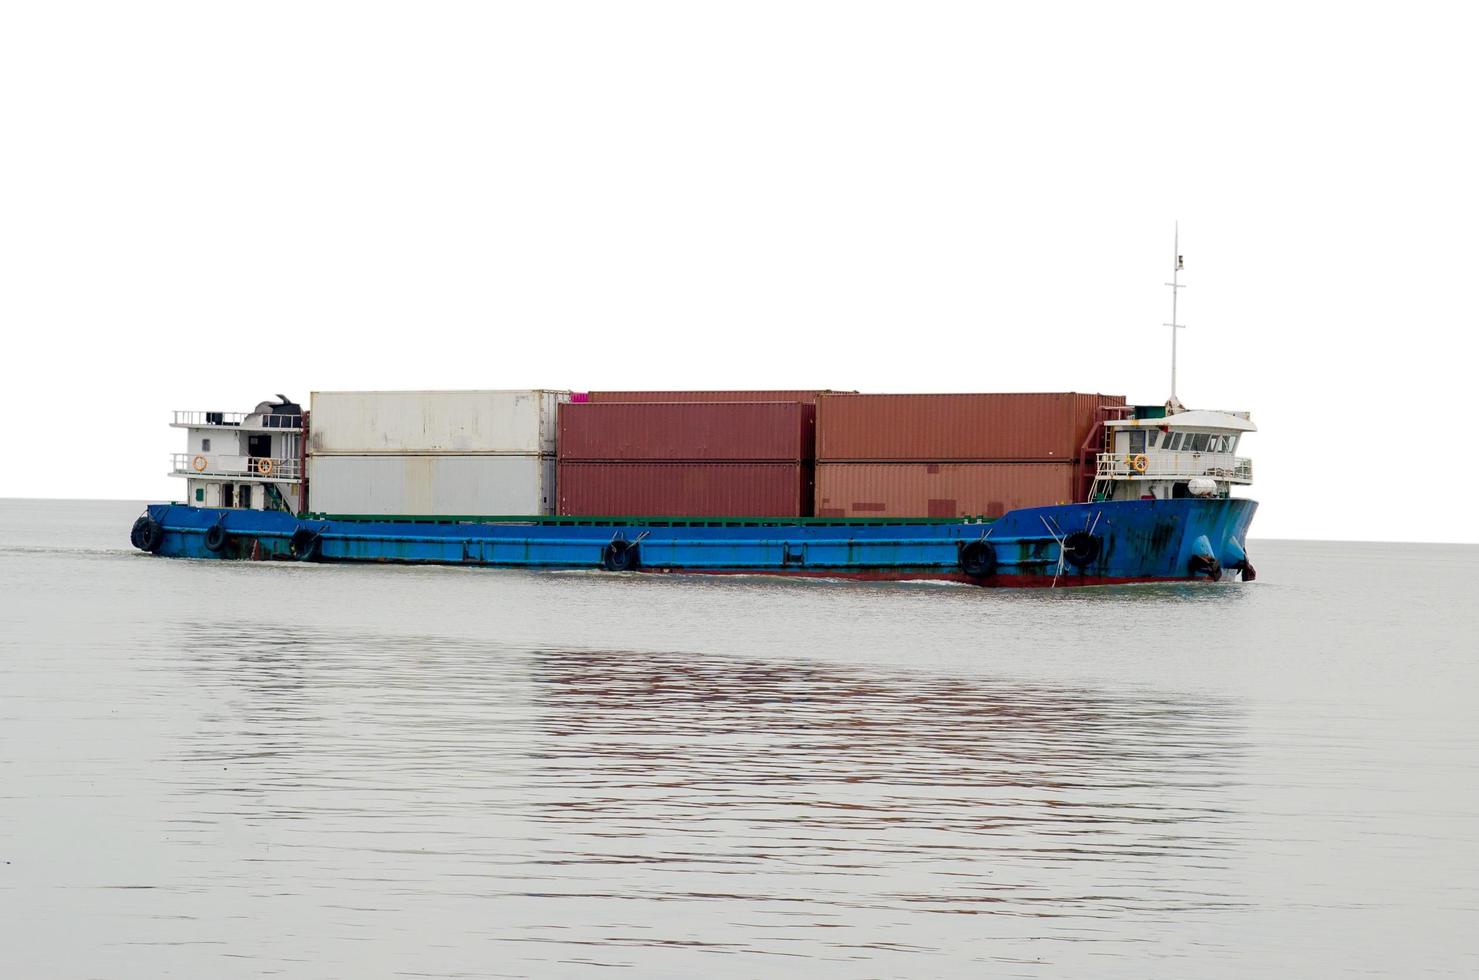 Containerfrachtschiff foto